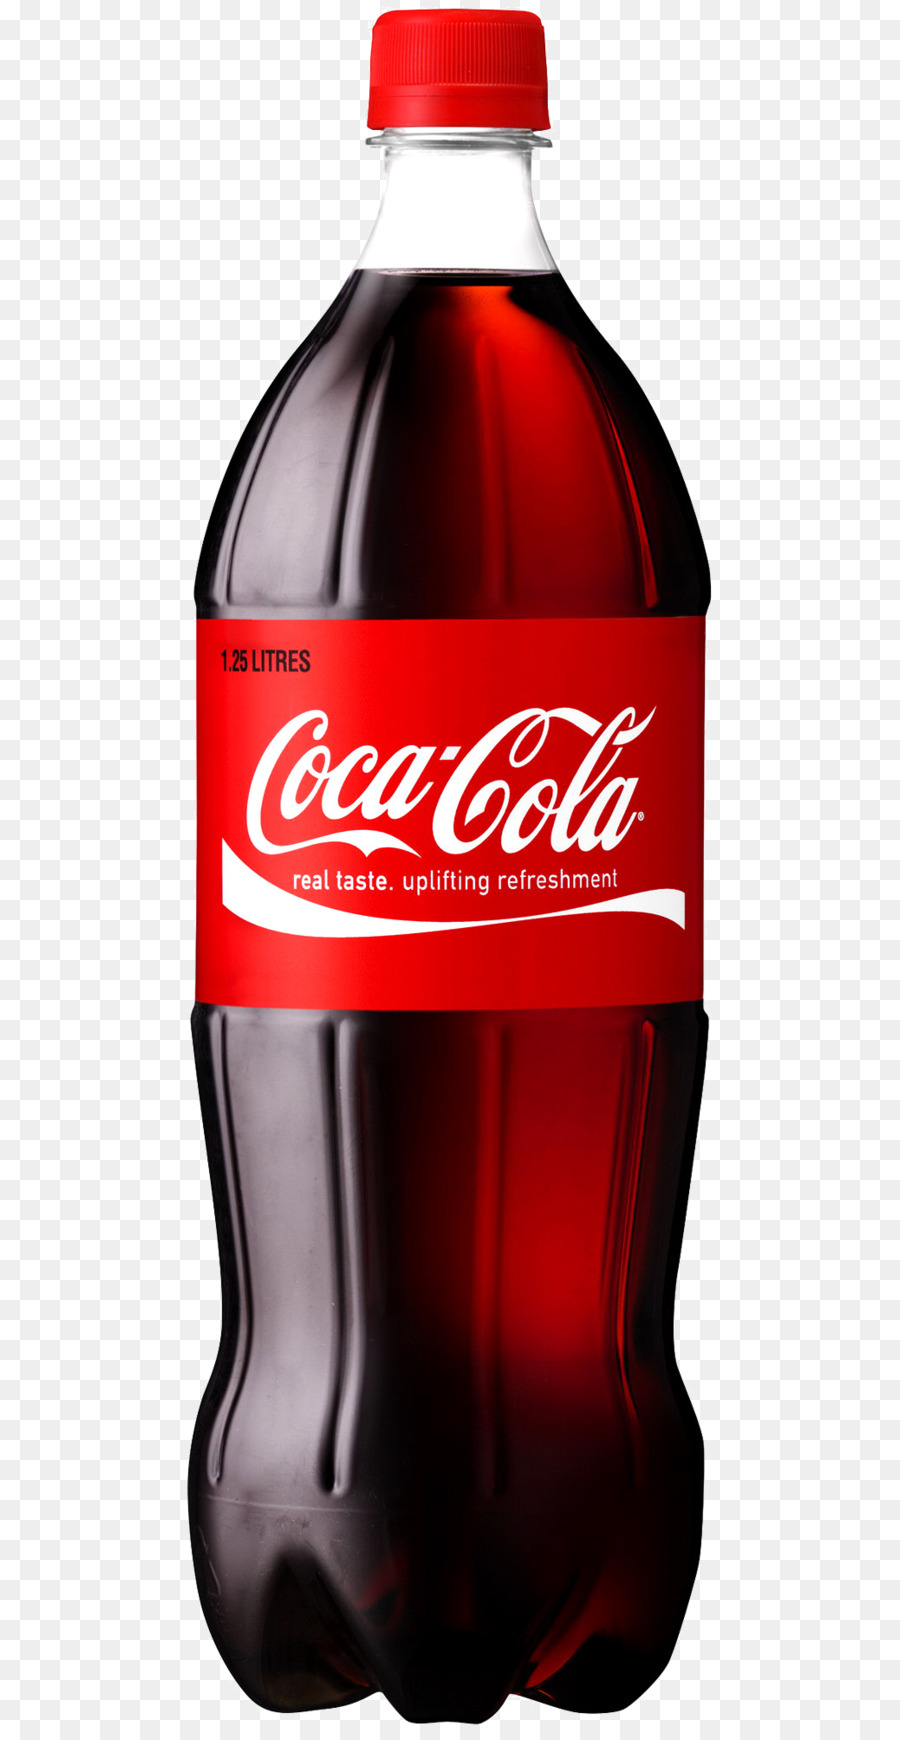 World of Coca-Cola Soft drink The Coca-Cola Company - Coca Cola bottle PNG image png download - 750*2000 - Free Transparent Coca Cola png Download.